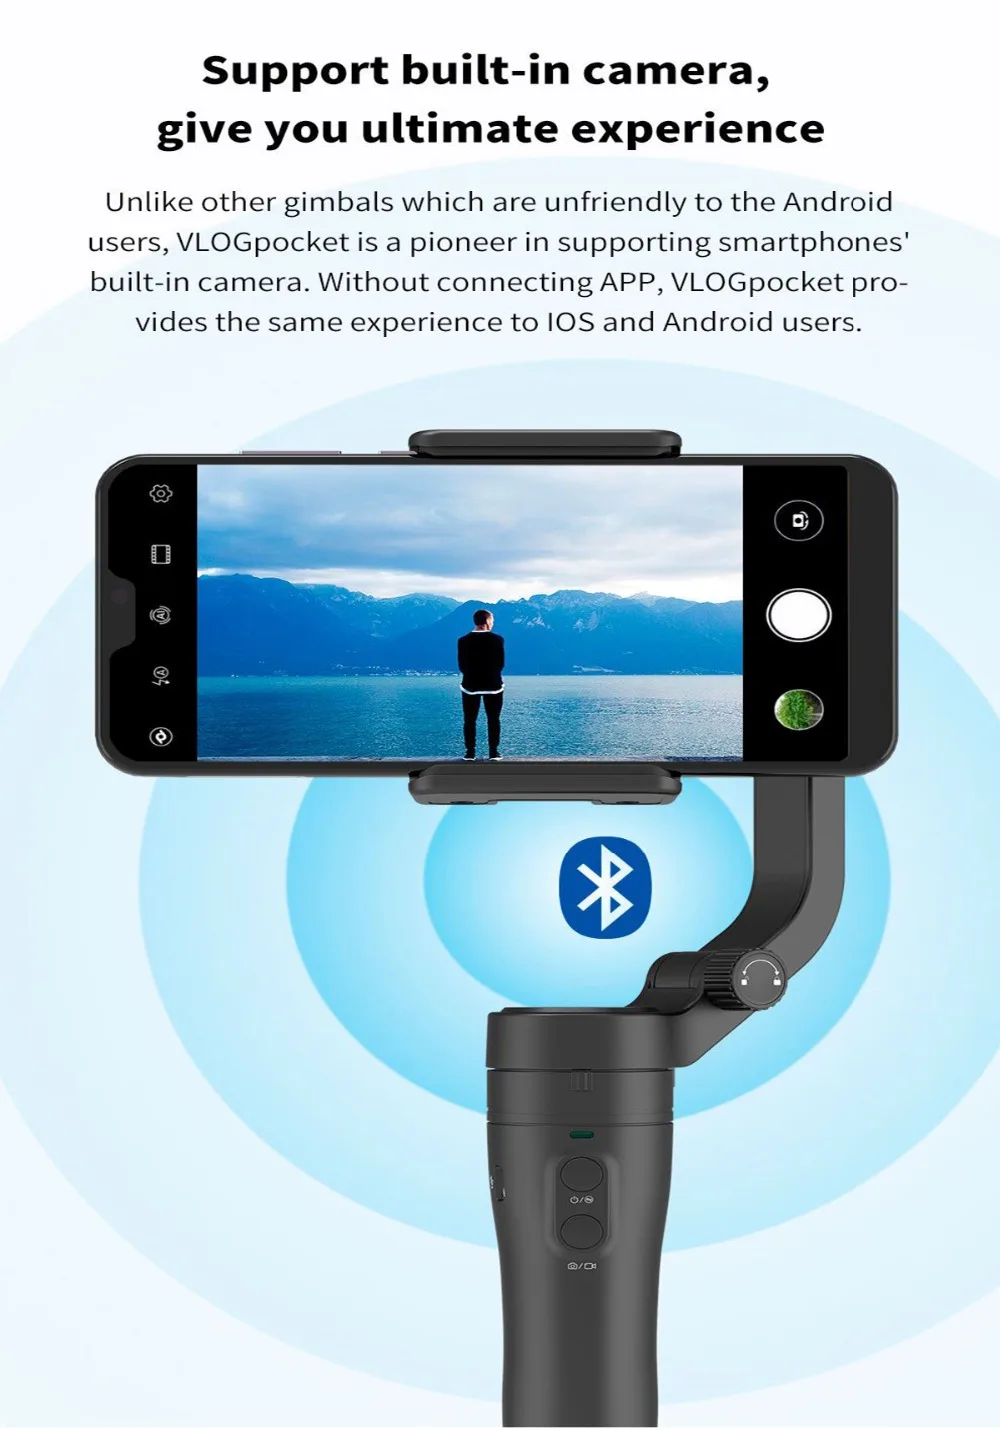 Feiyu Vlog Pocket Handheld Phone Gimbal Smartphone Stabilizer for iPhone 11/11 Pro/Samsung/Huawei Pk smooth 4 DJI Osmo mobile 3